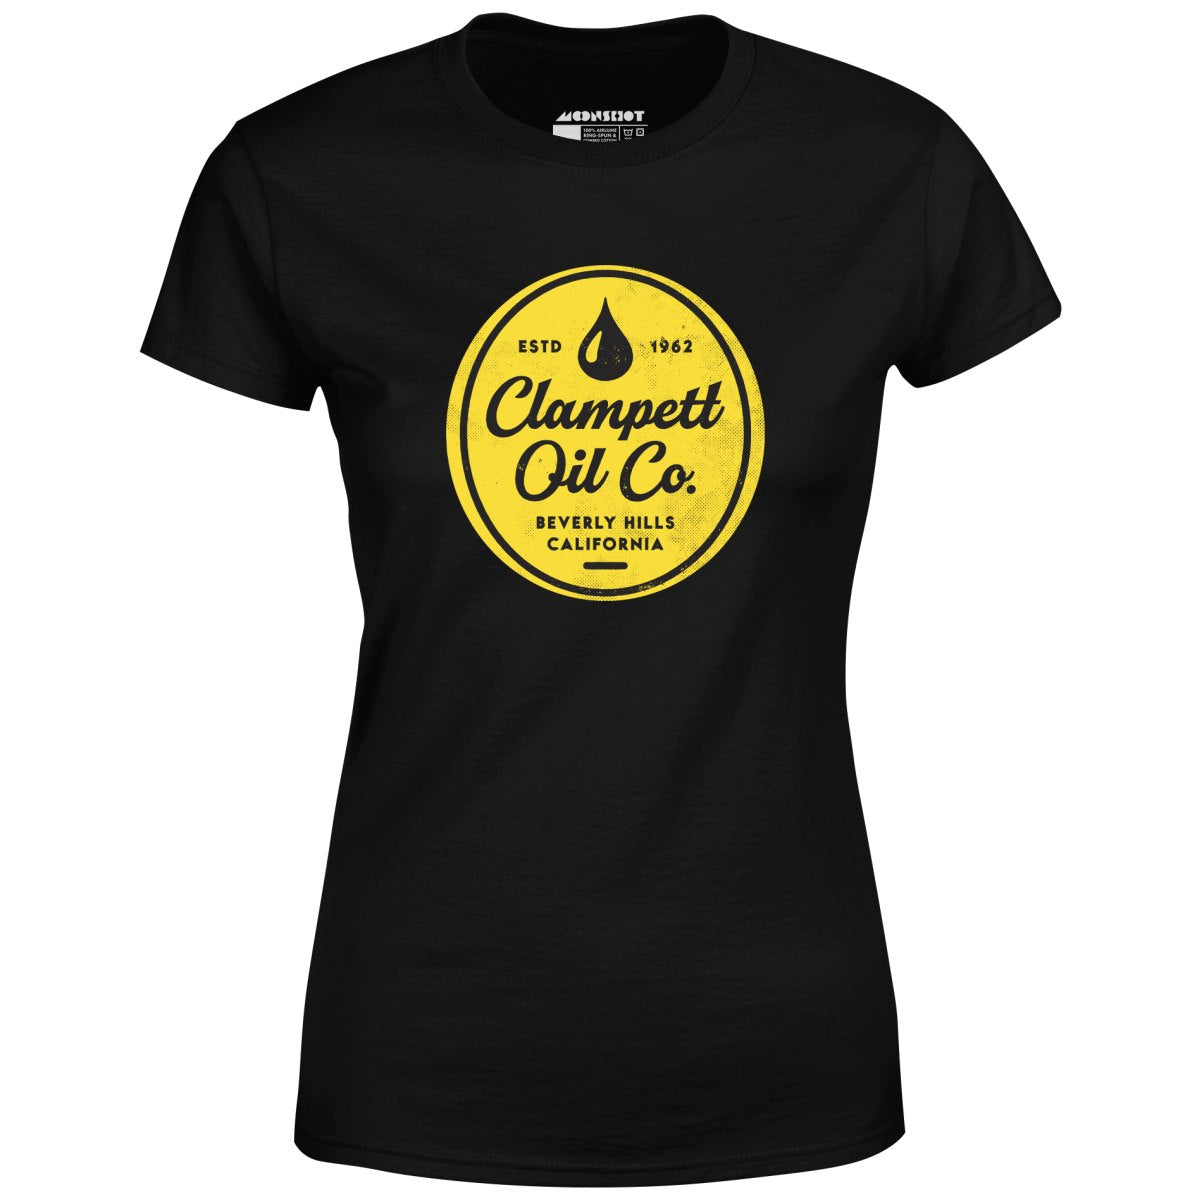 Clampett Oil Co. - Women's T-Shirt